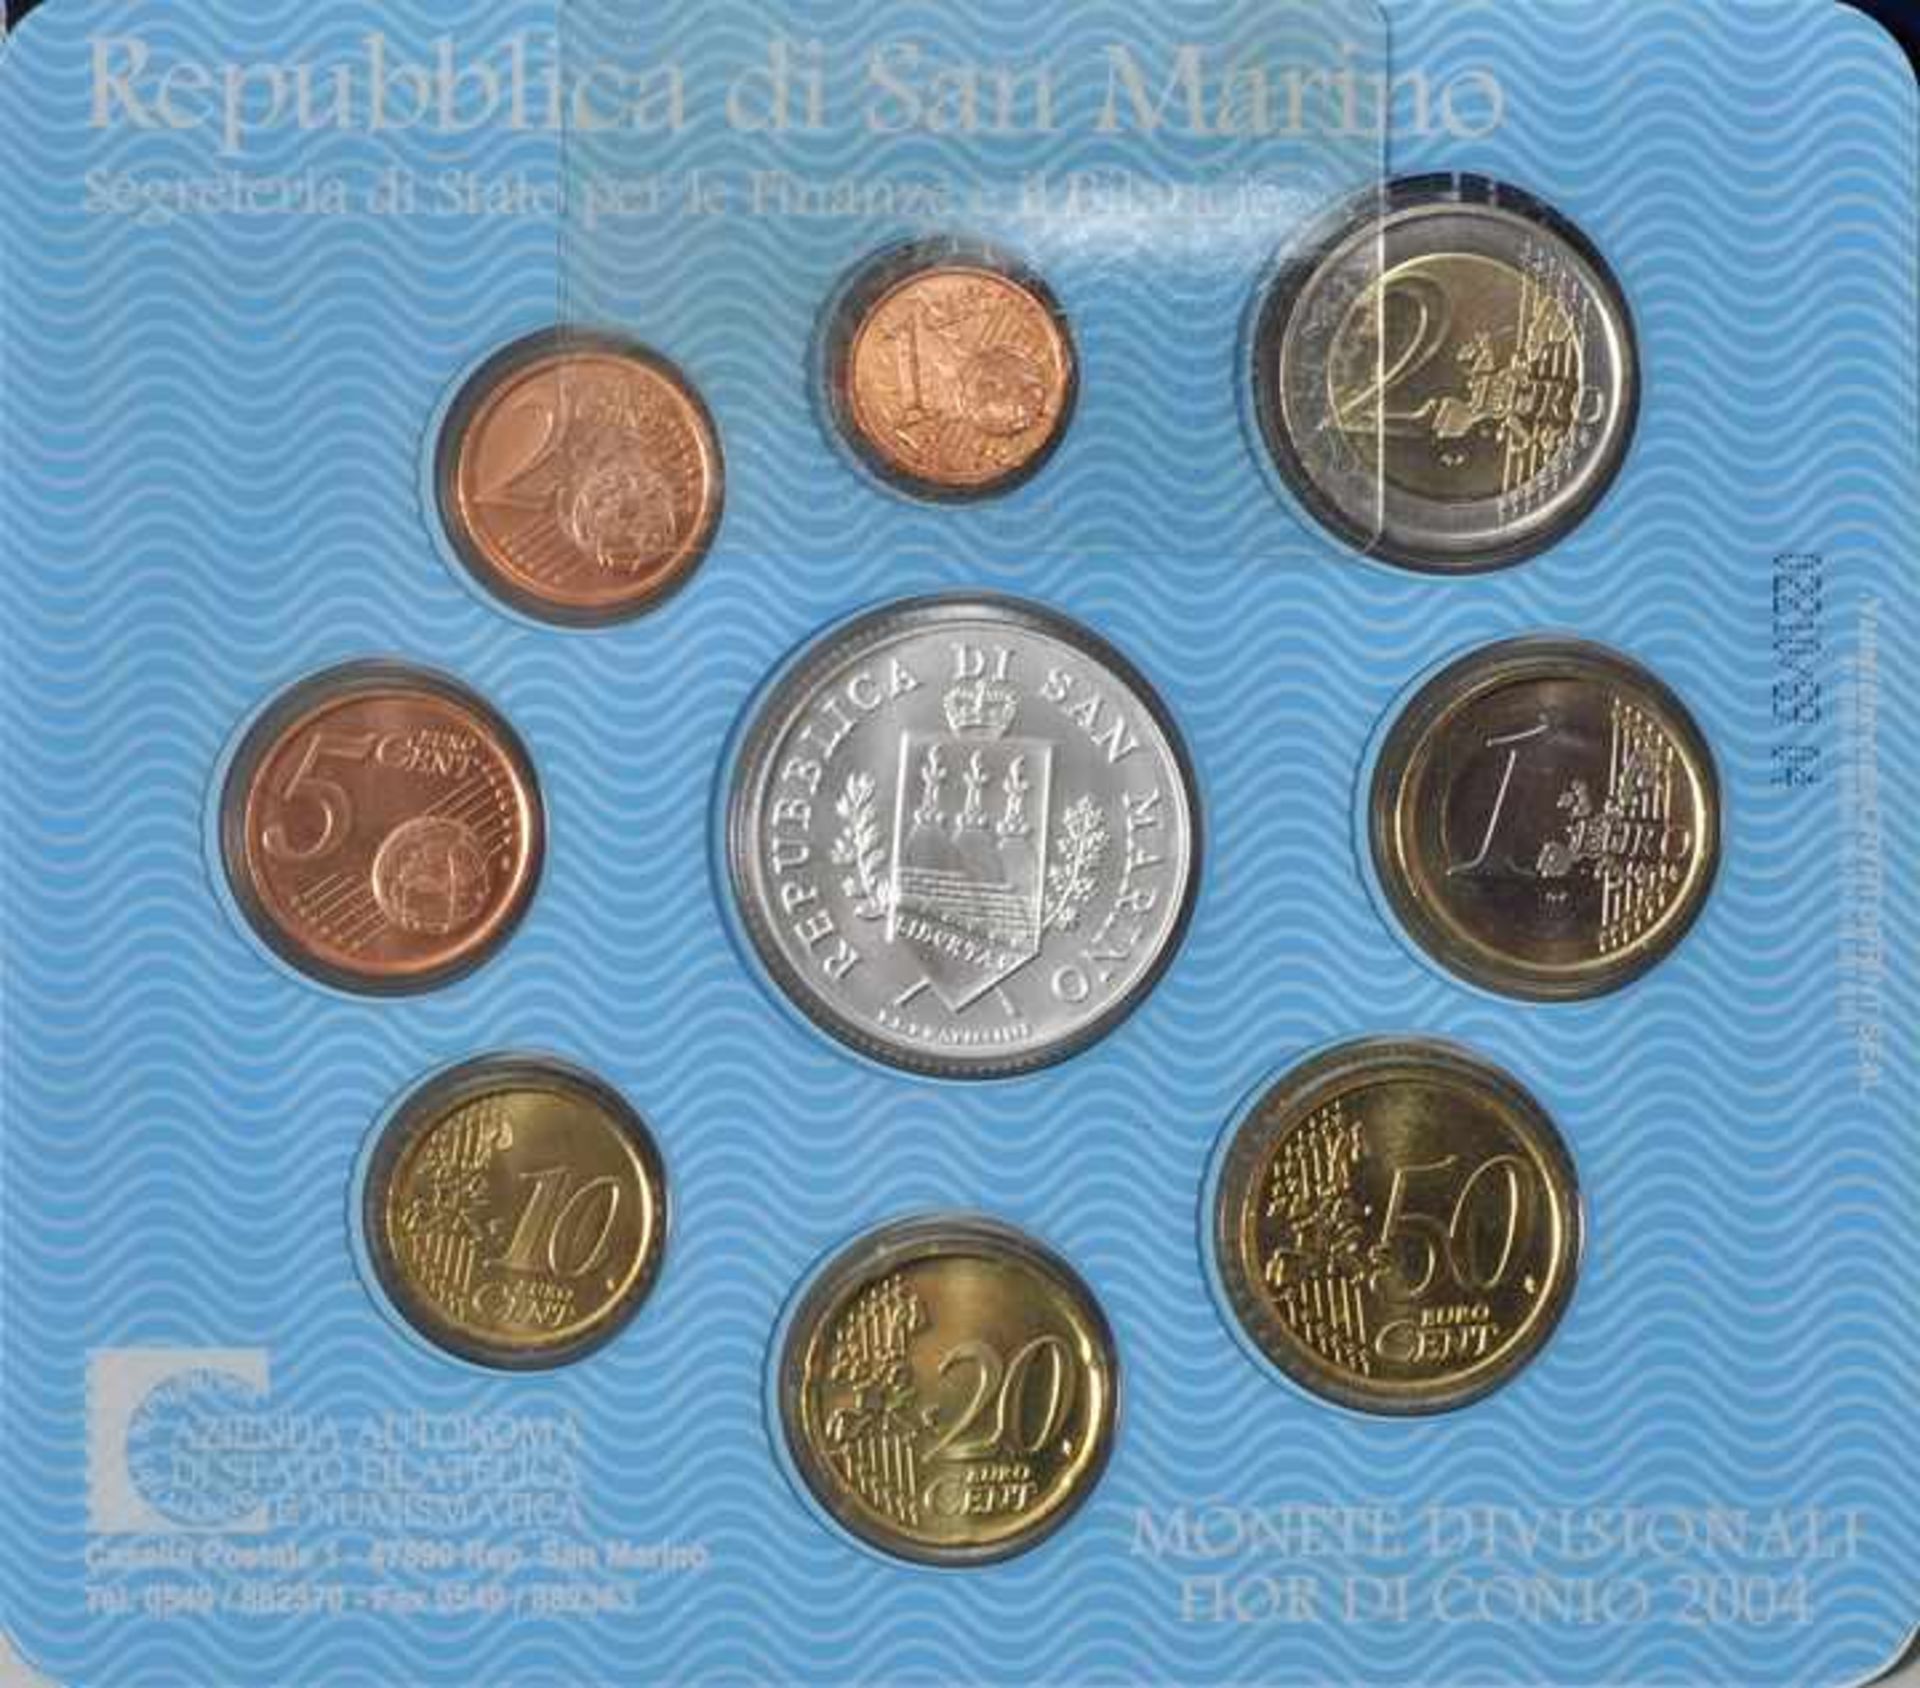 Kursmünzensatz, San Marino, 2003Repubblica di San Marino. 8 Kursmünzen im Wert v. 1 Cent-2 Euro, - Bild 3 aus 3